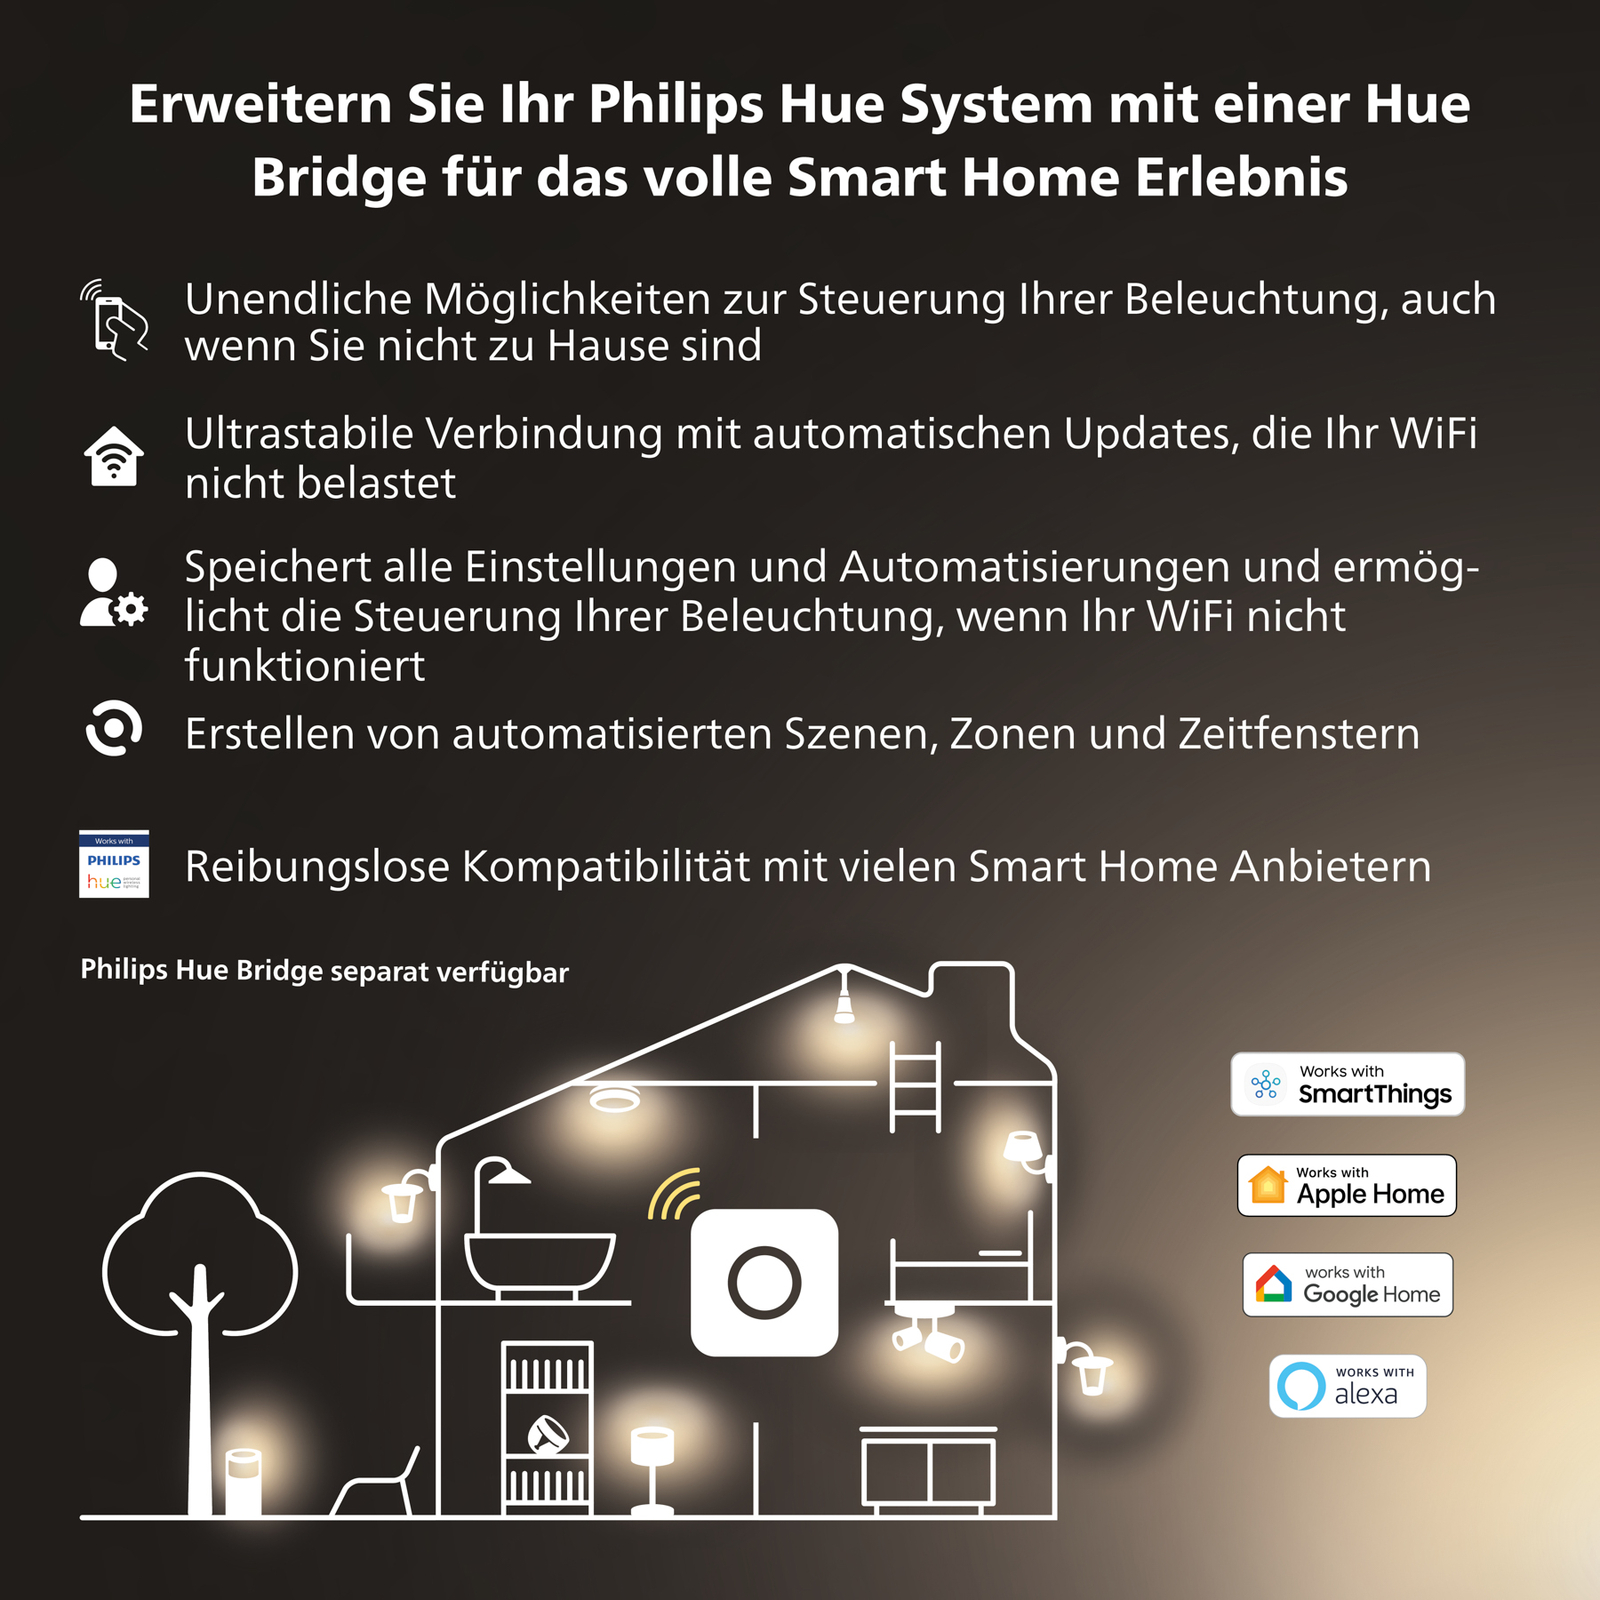 Philips Hue White Ambiance E27 amp LED 8W 1100lm